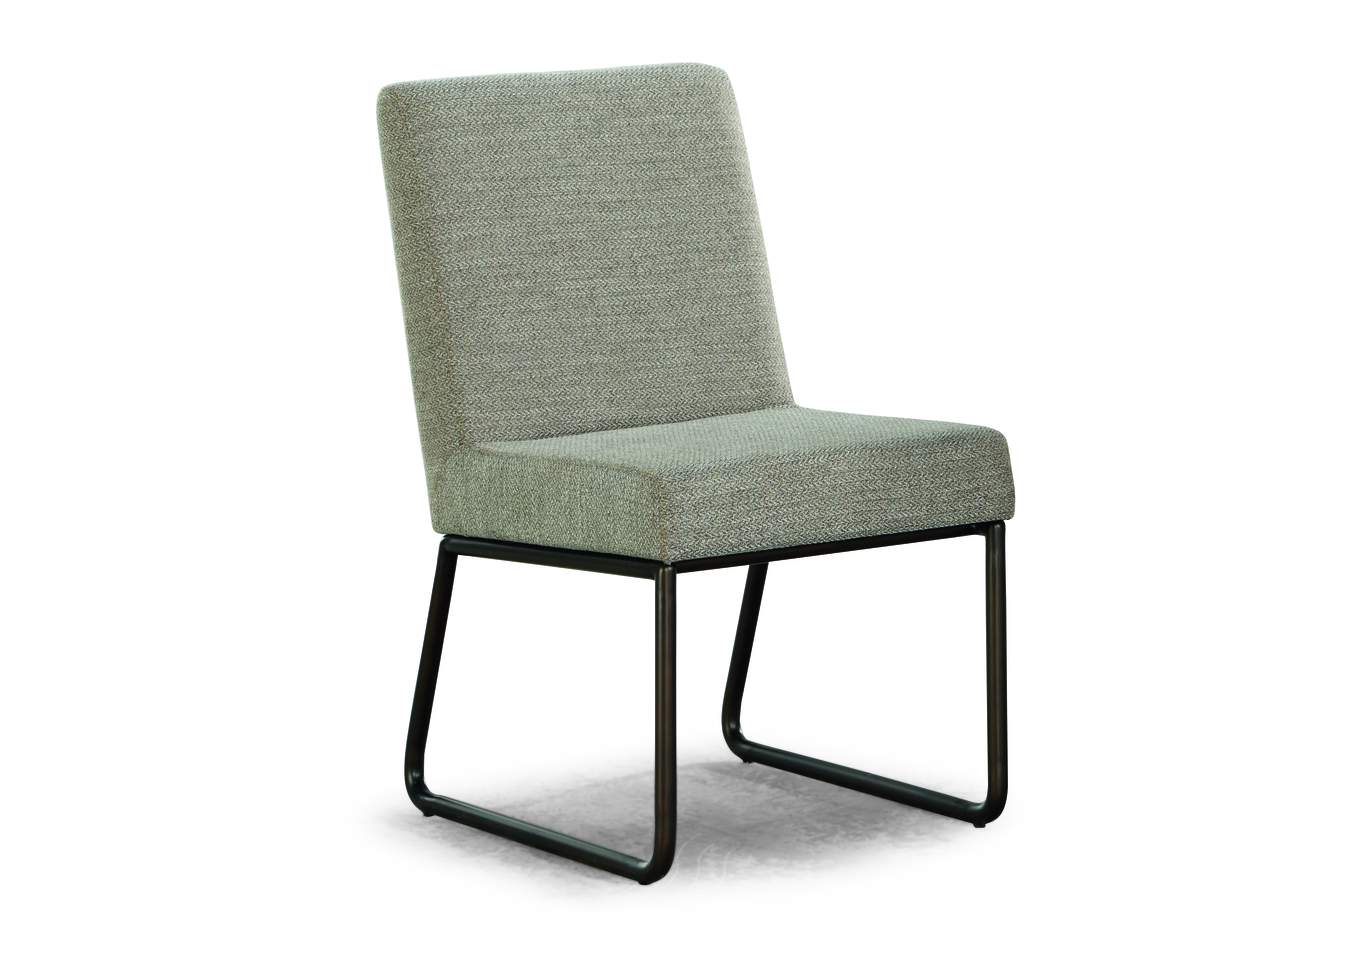 Shadow Tan Dining Chair [Set of 2],Flexsteel